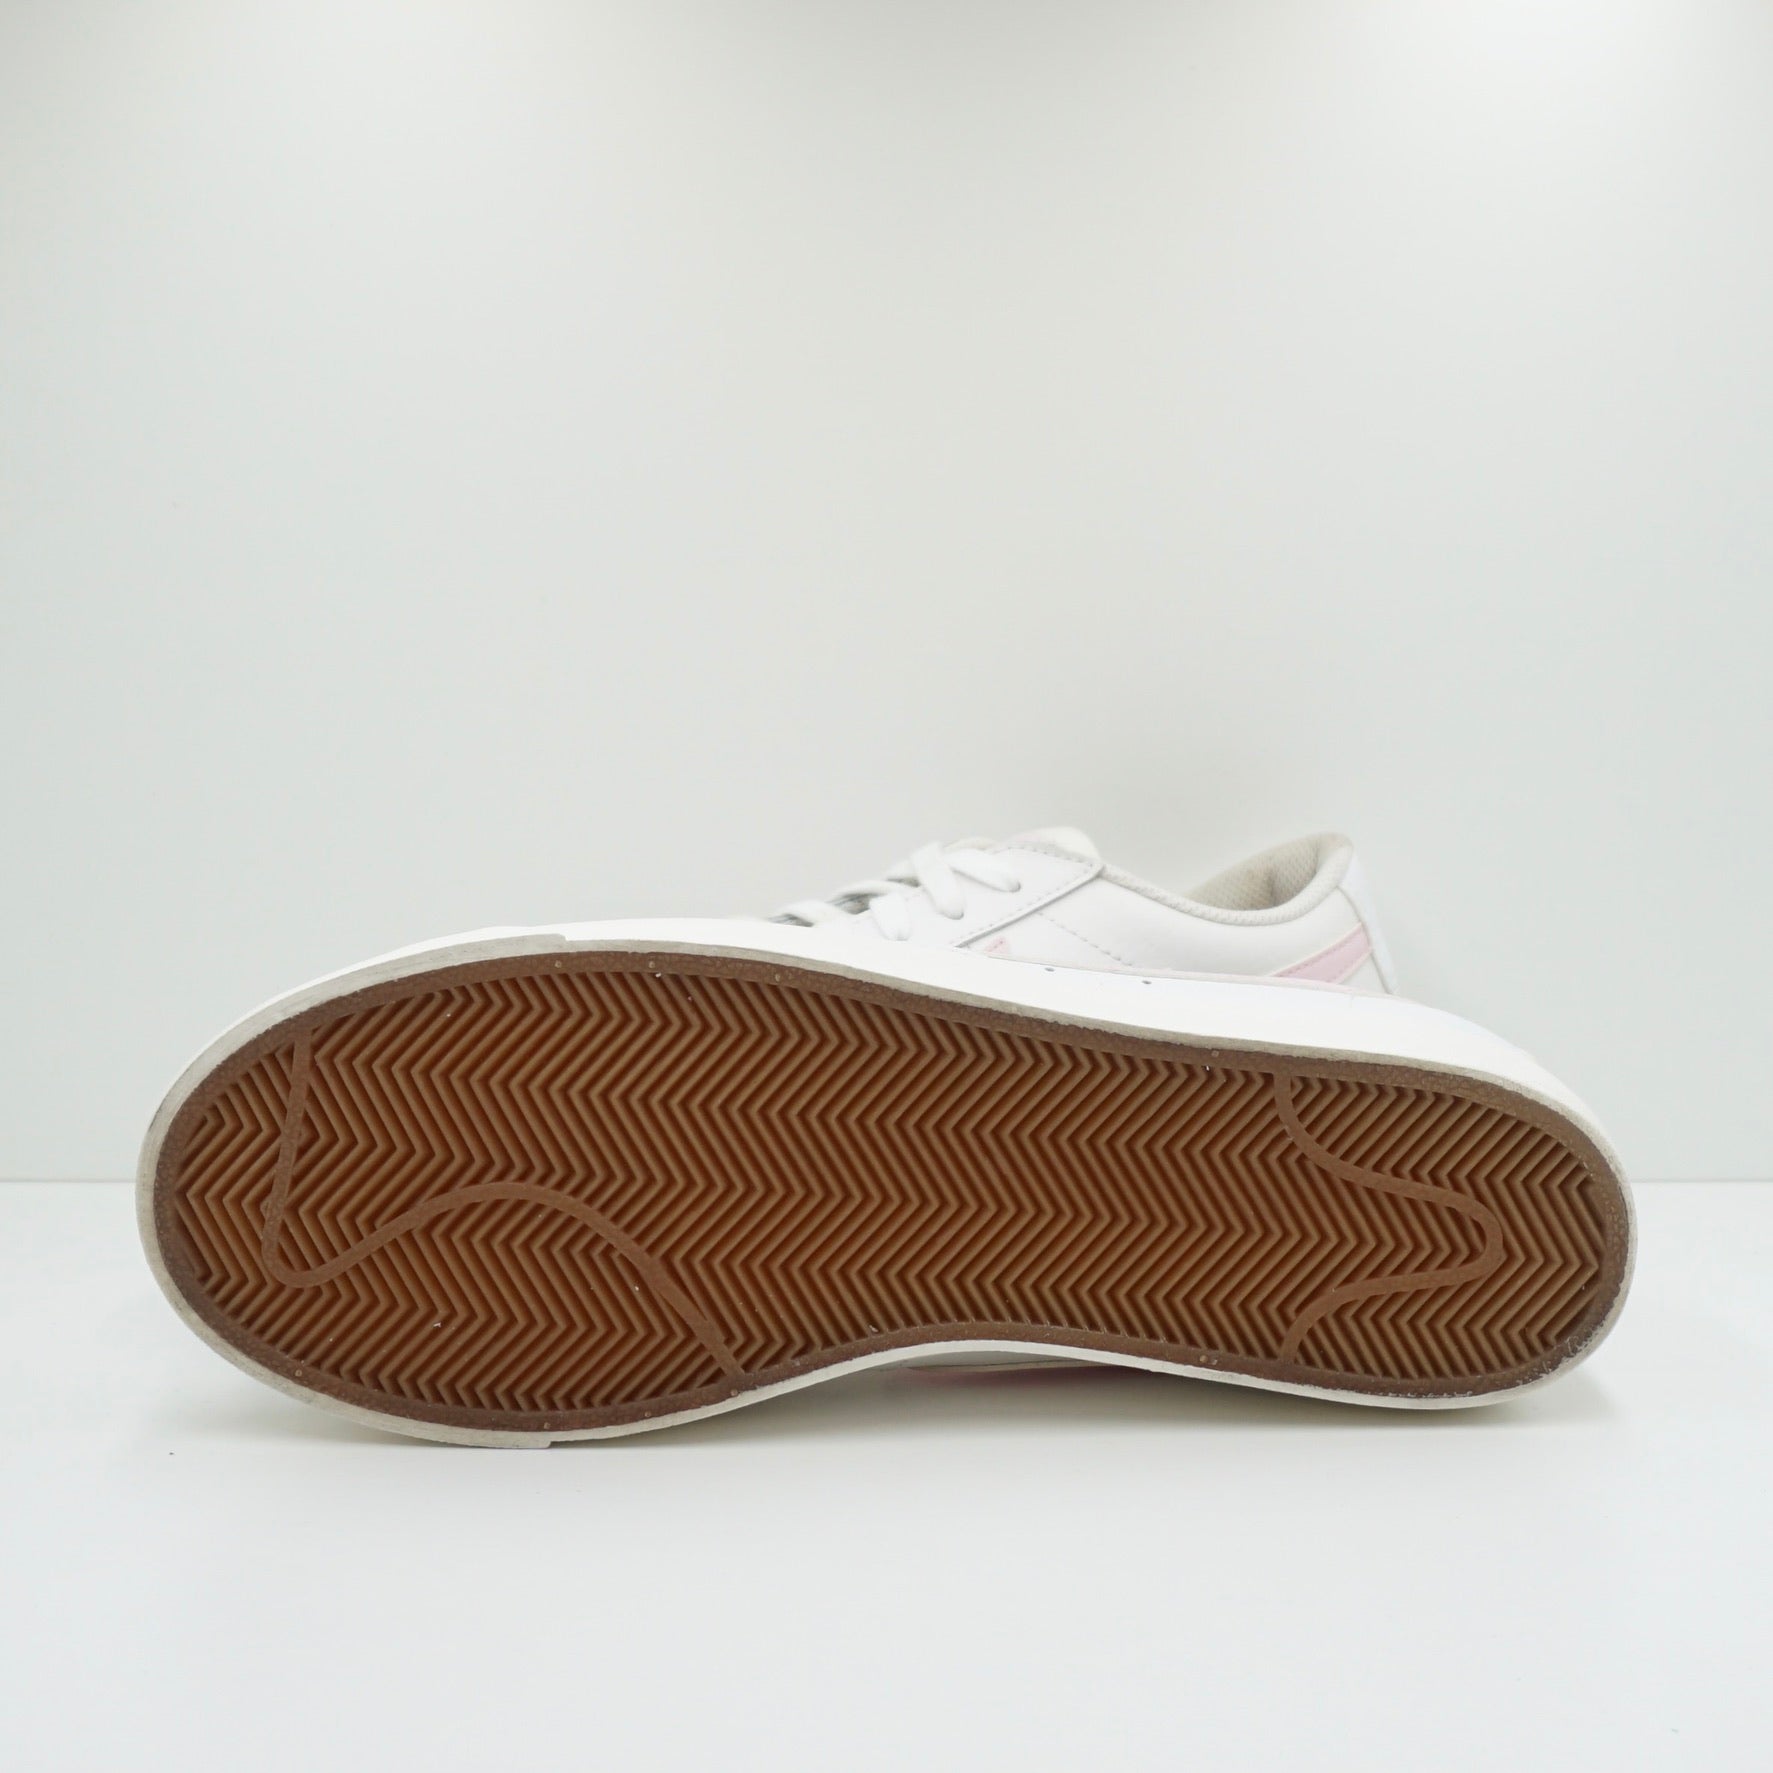 Nike Blazer Low Leather White Pink